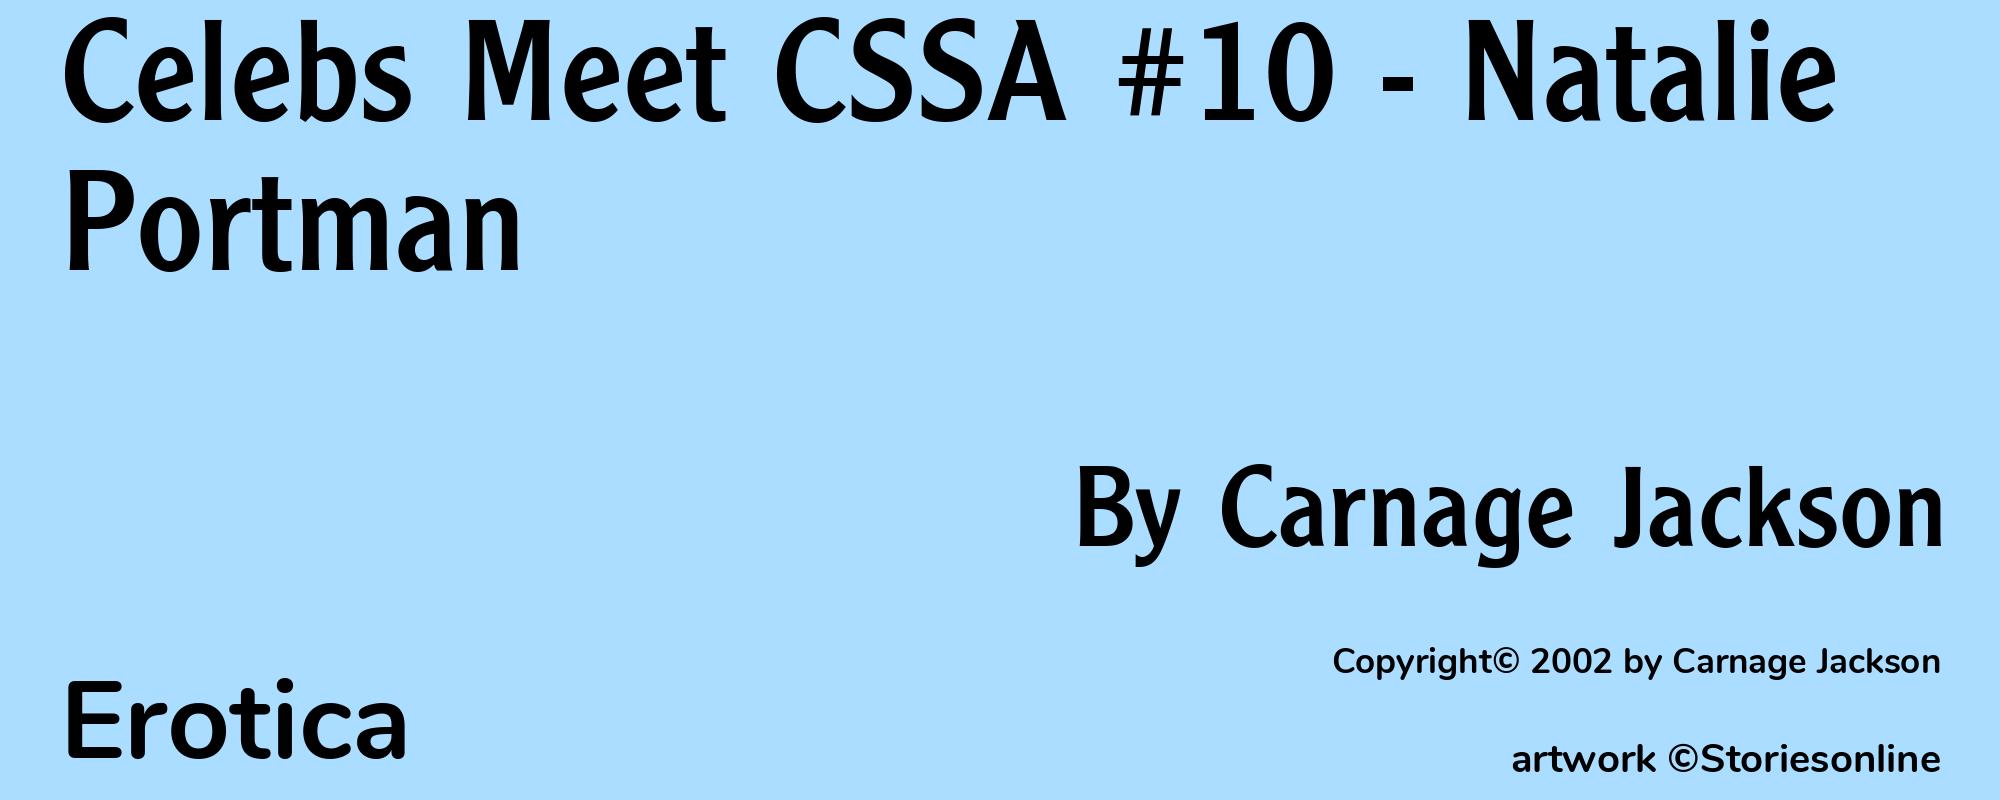 Celebs Meet CSSA #10 - Natalie Portman - Cover